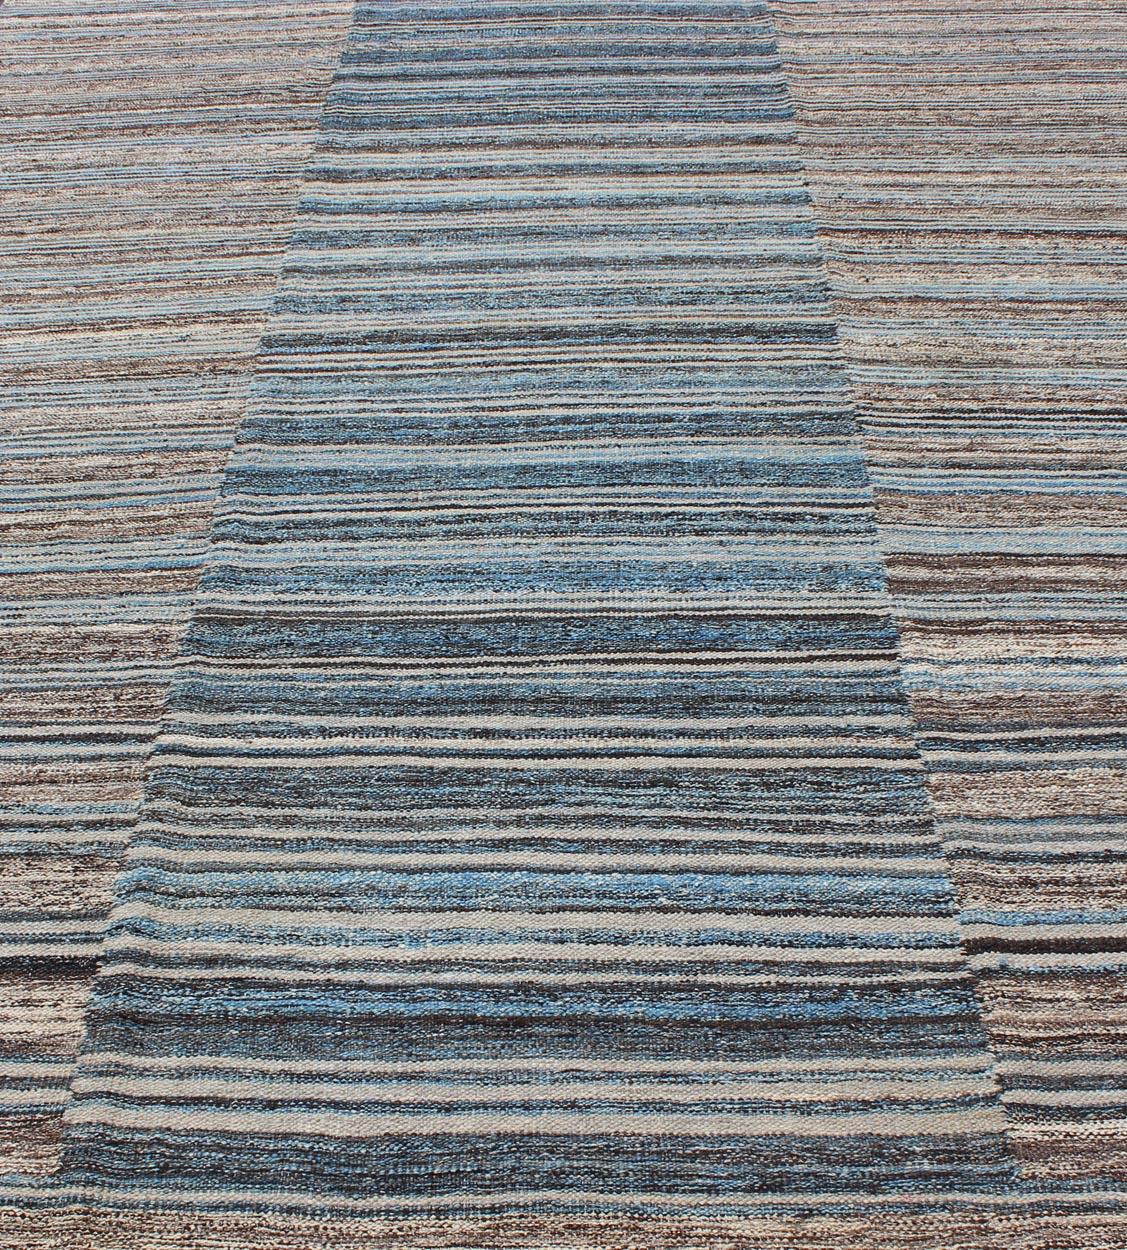 Contemporary Flat-Weave Kilim Rug with Classic Stripe Design in Blue, Cream, Brown